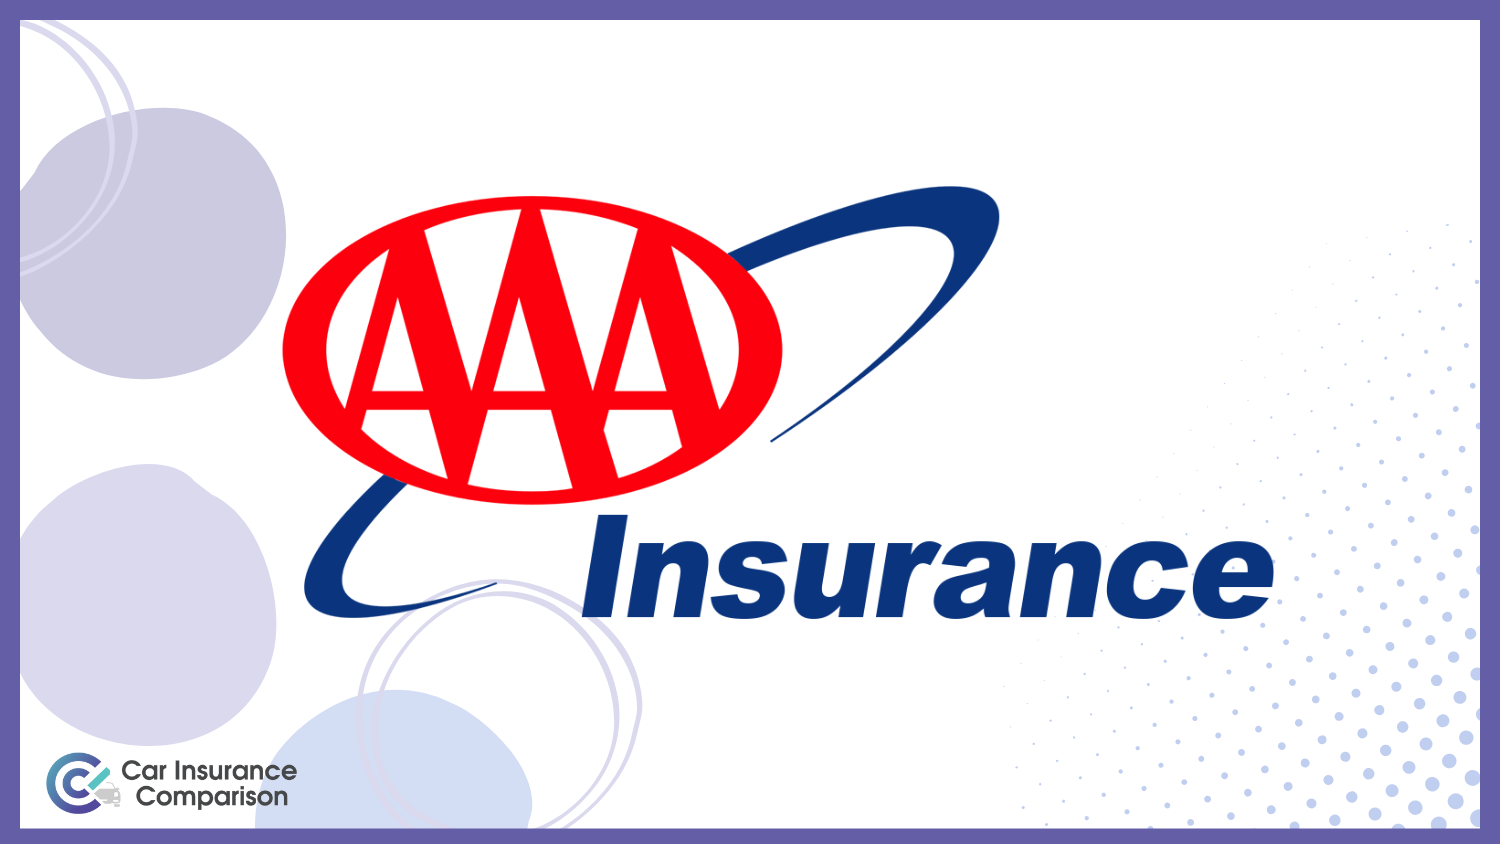 AAA: Best Car Insurance When Self-Employed